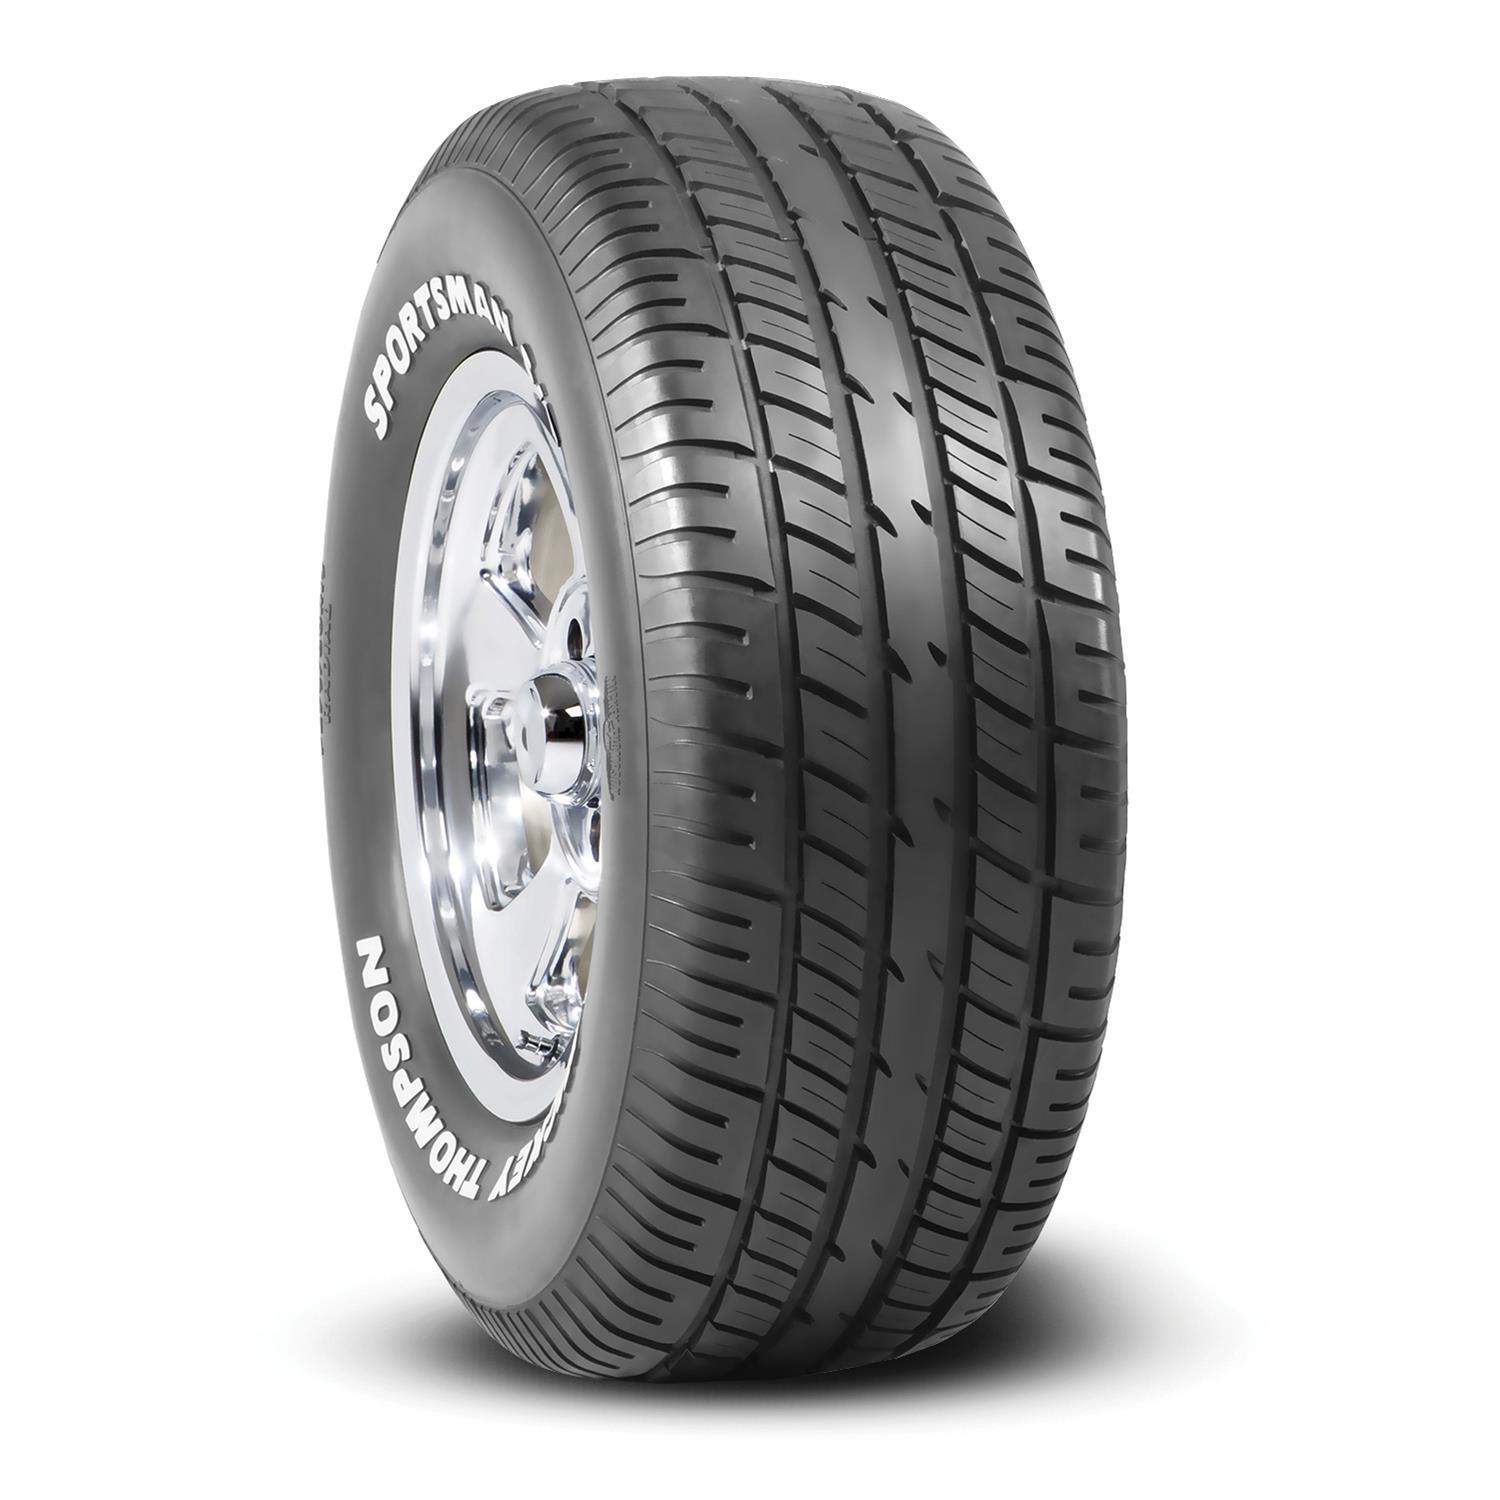 P275/60R15 Sportsman S/T Tire - Burlile Performance Products